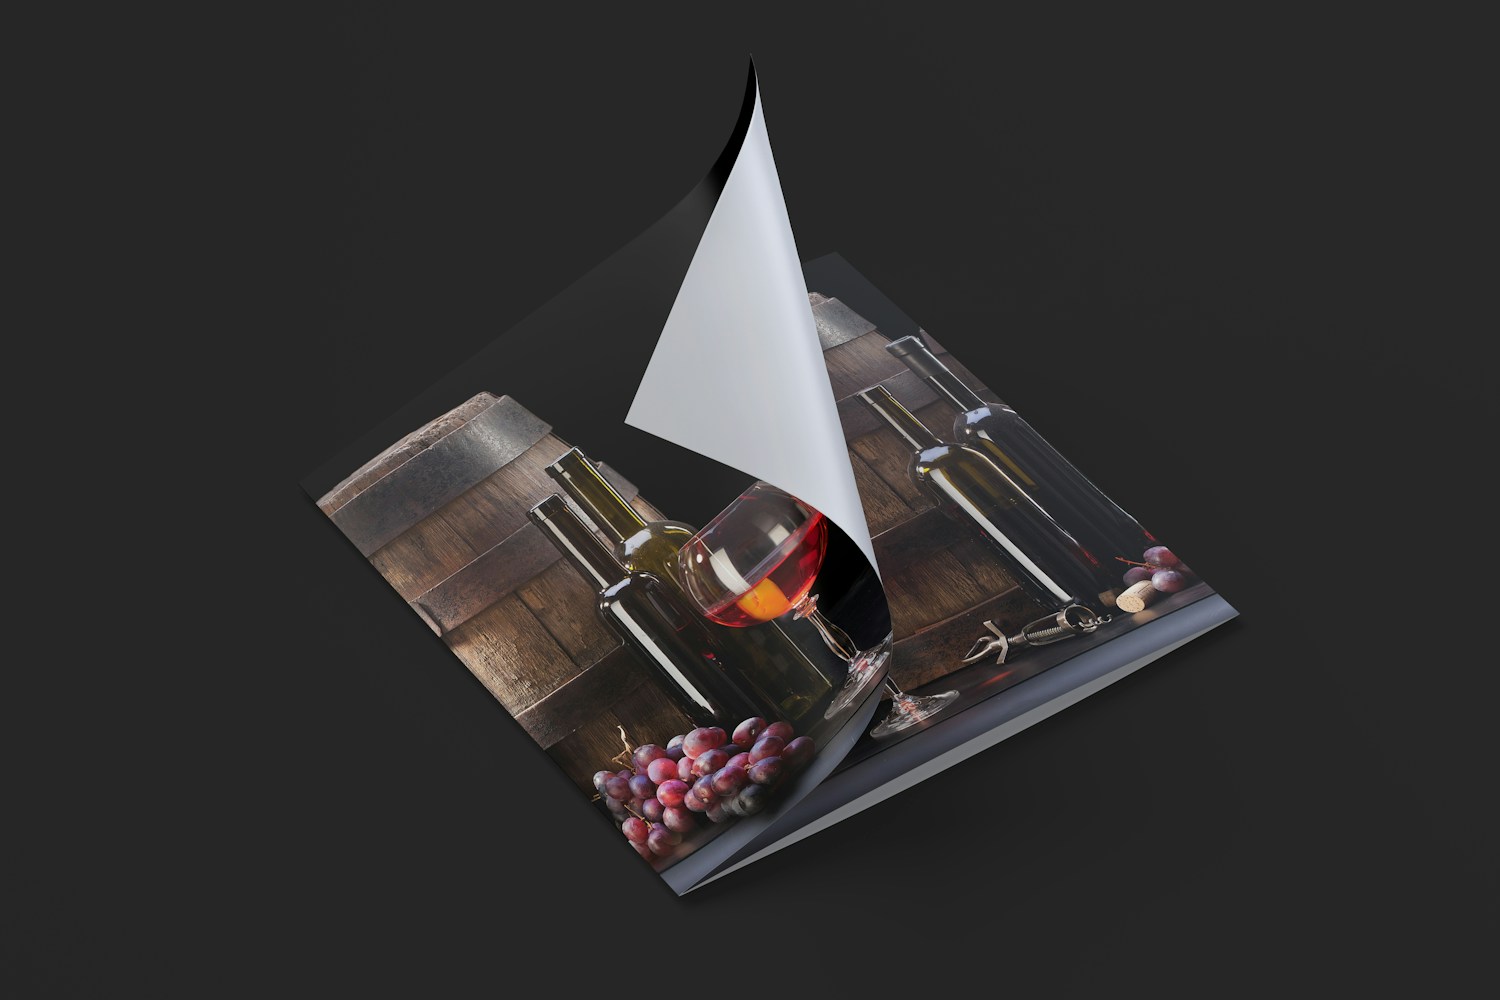 Square Tri-Fold Brochure Mockup 02